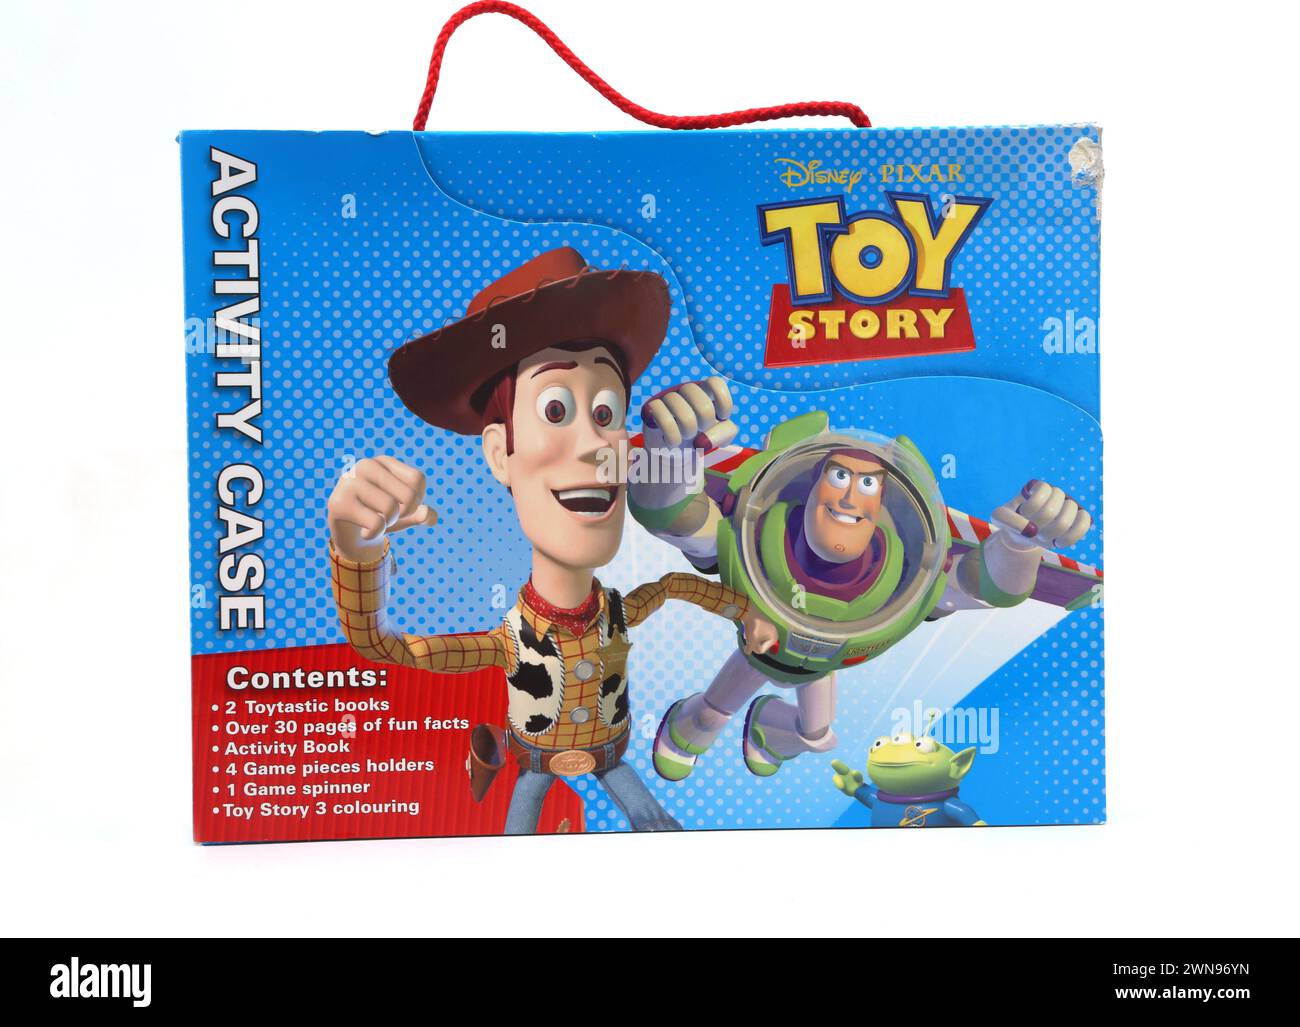 Disney Pixar Toy Story Activity Case Stock Photo